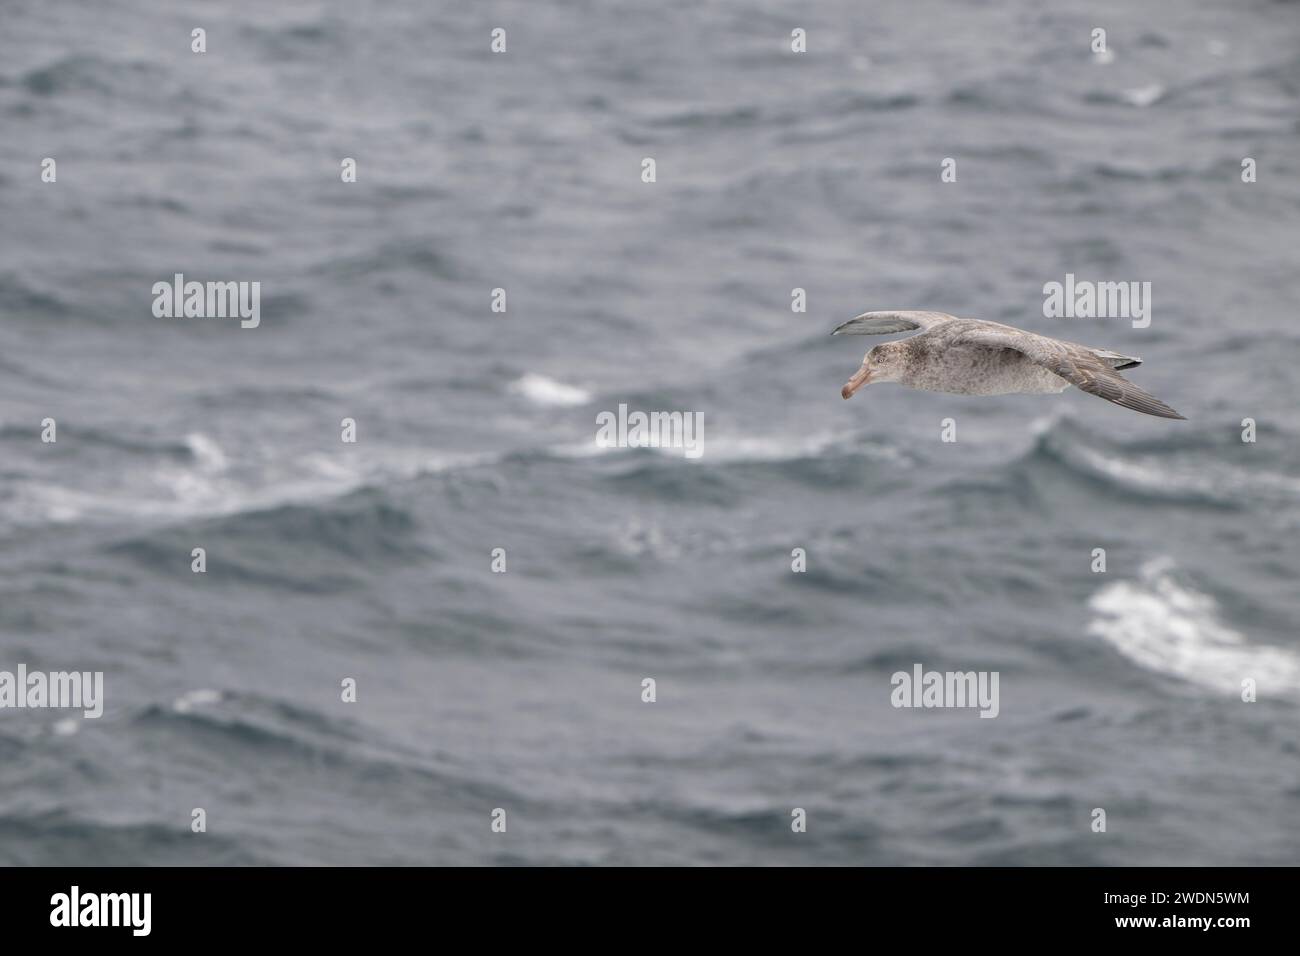 Northern Giant Petrel, Macronectes halli, flying over South Atlantic ocean, large powerful predatory seabird Stock Photo